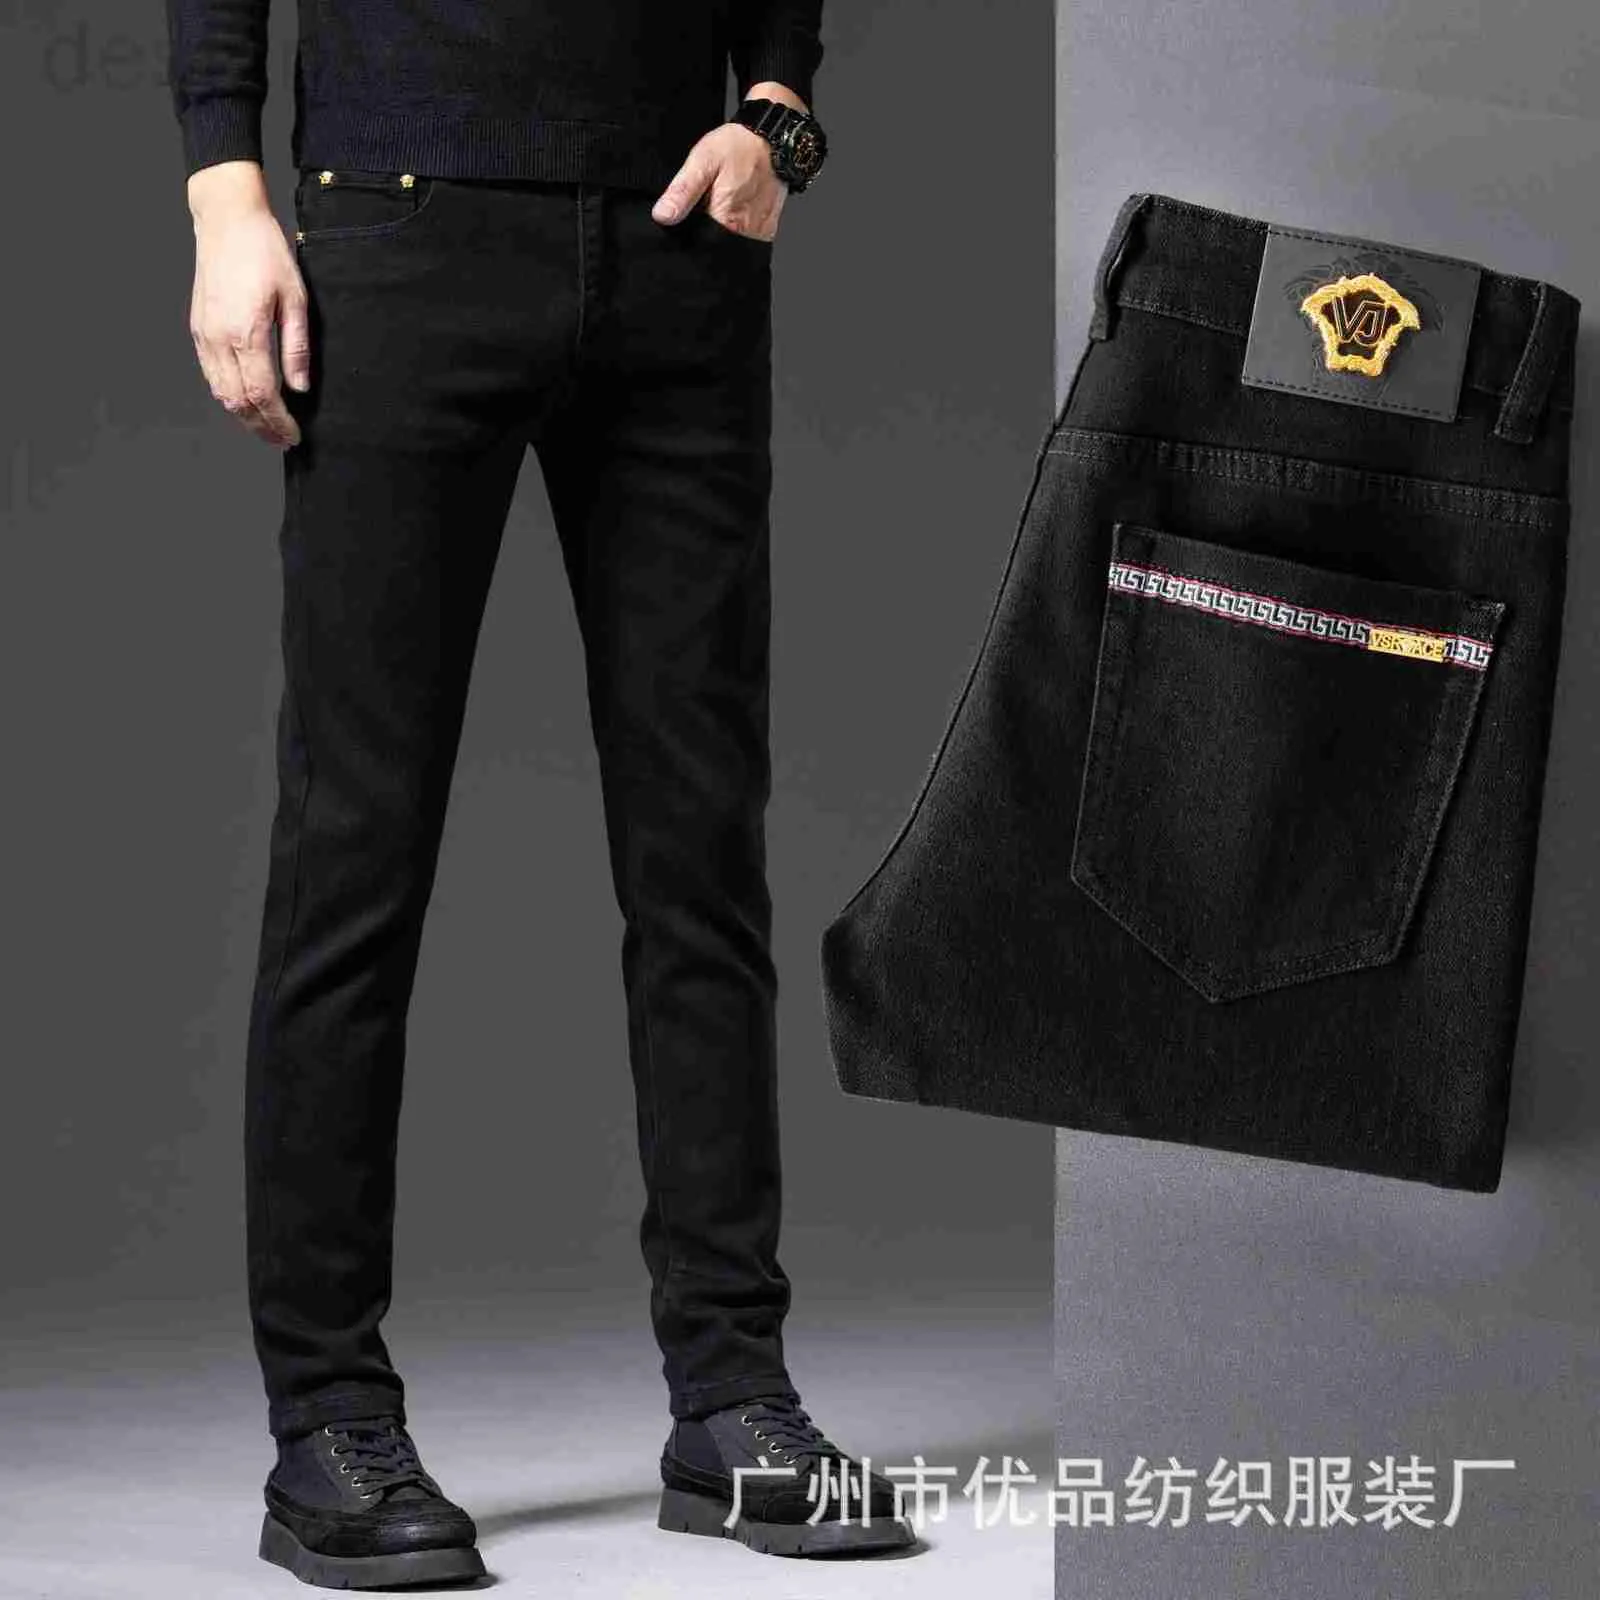 Men's Jeans designer Chao brand high-end men's Black Slim elastic slim fit fashion Korean autumn and winter pants G6AH